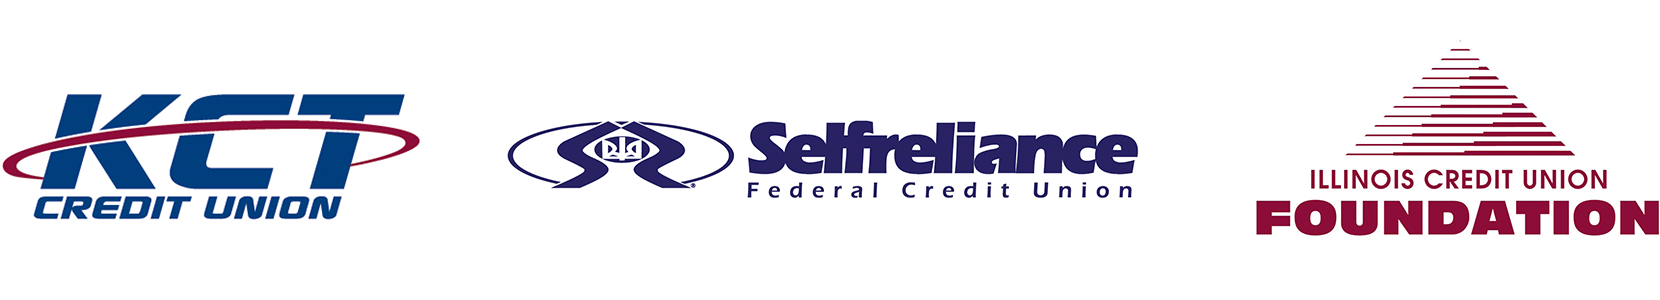 KCT Credit Union, Selfreliance Federal Credit Union, Illinois Credit Union Foundation